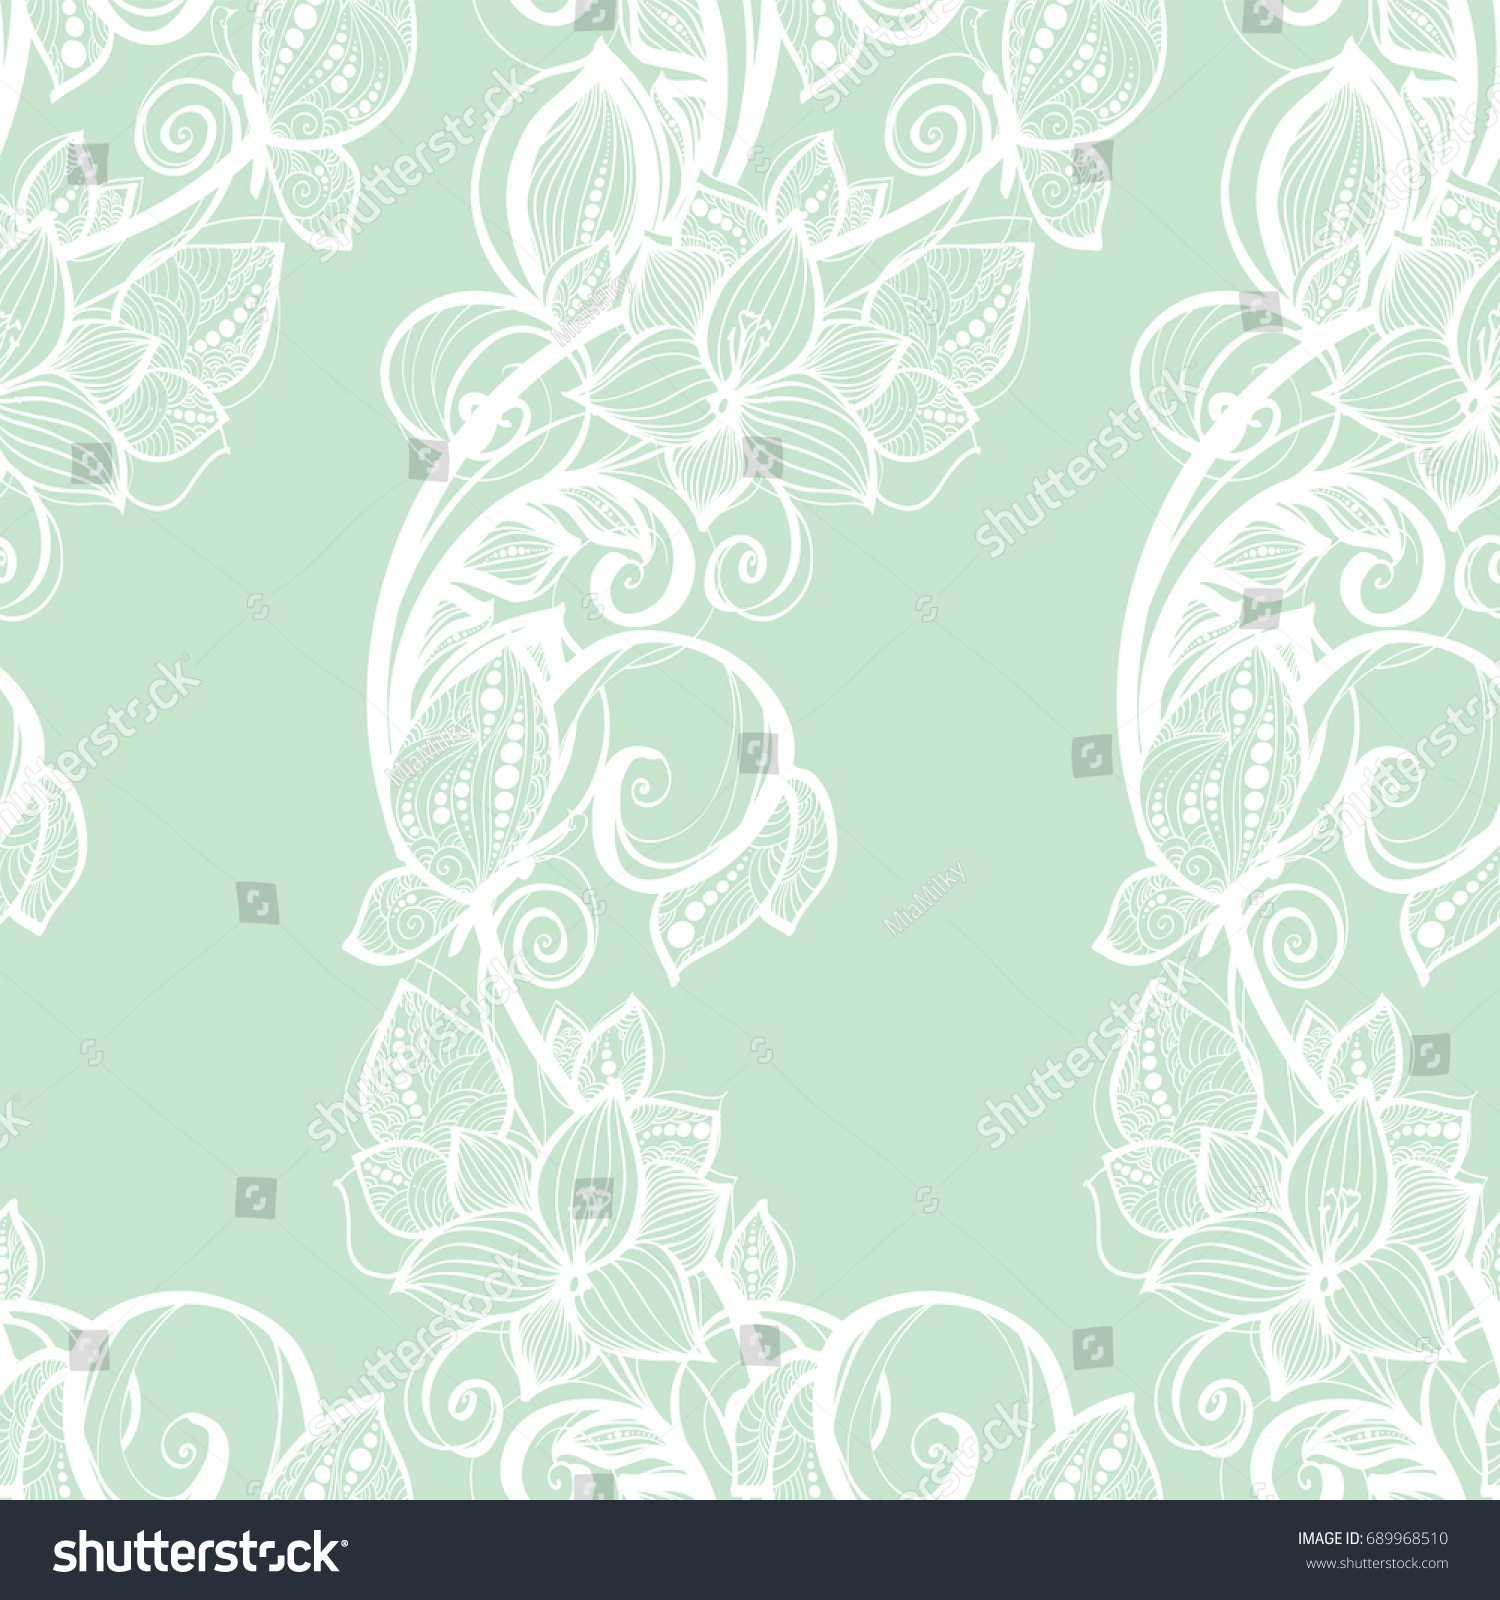 Seamless Pattern White Lace On Mint: Vector Có Sẵn (Miễn Phí Bản Quyền)  587780363 | Shutterstock